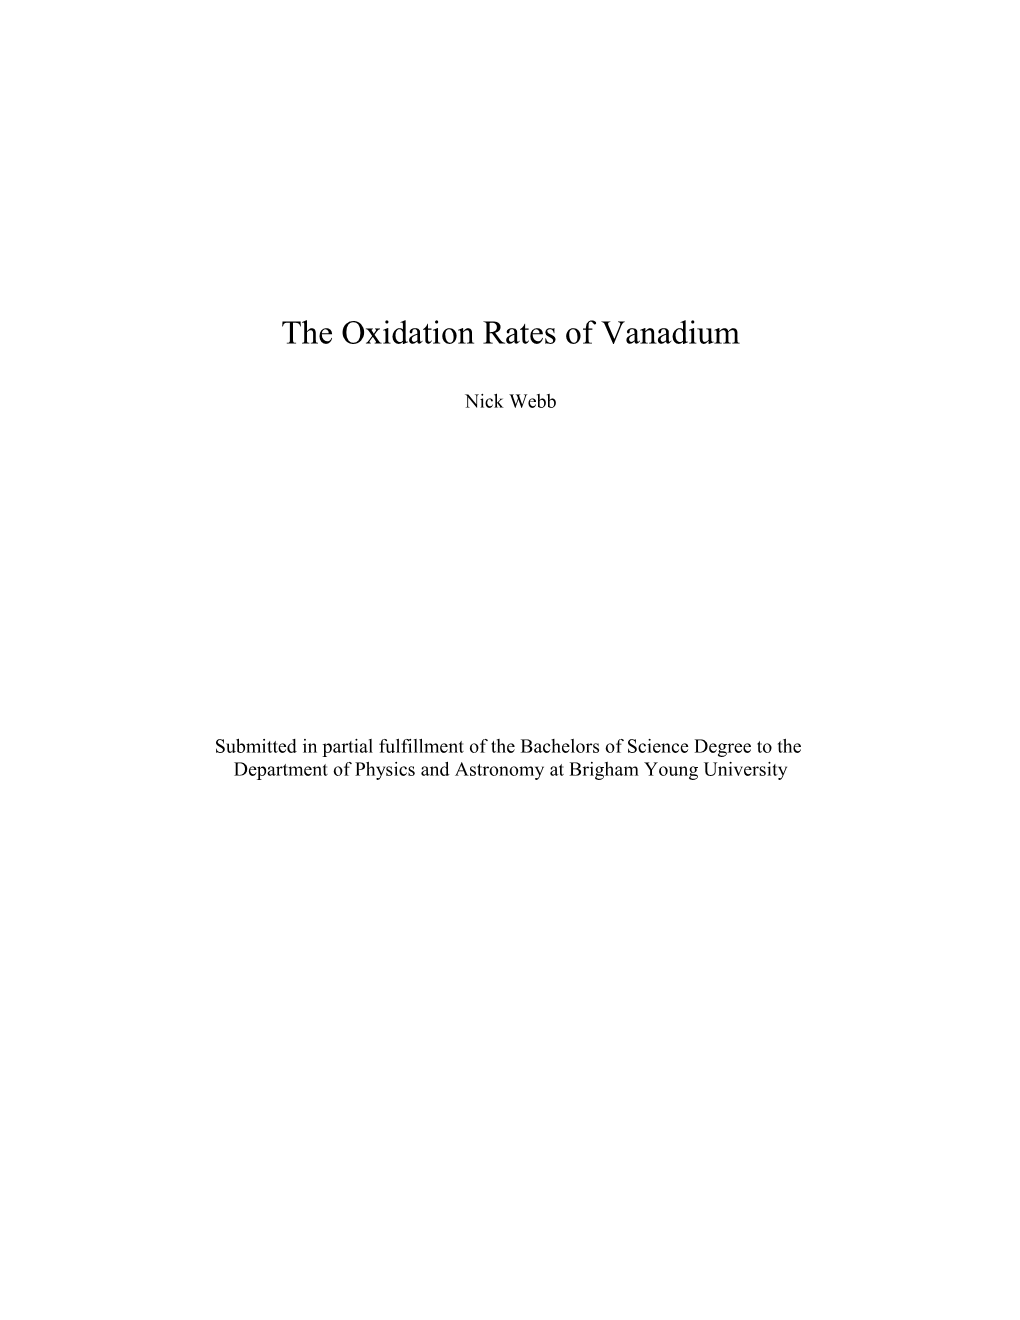 The Oxidation Rates of Vanadium